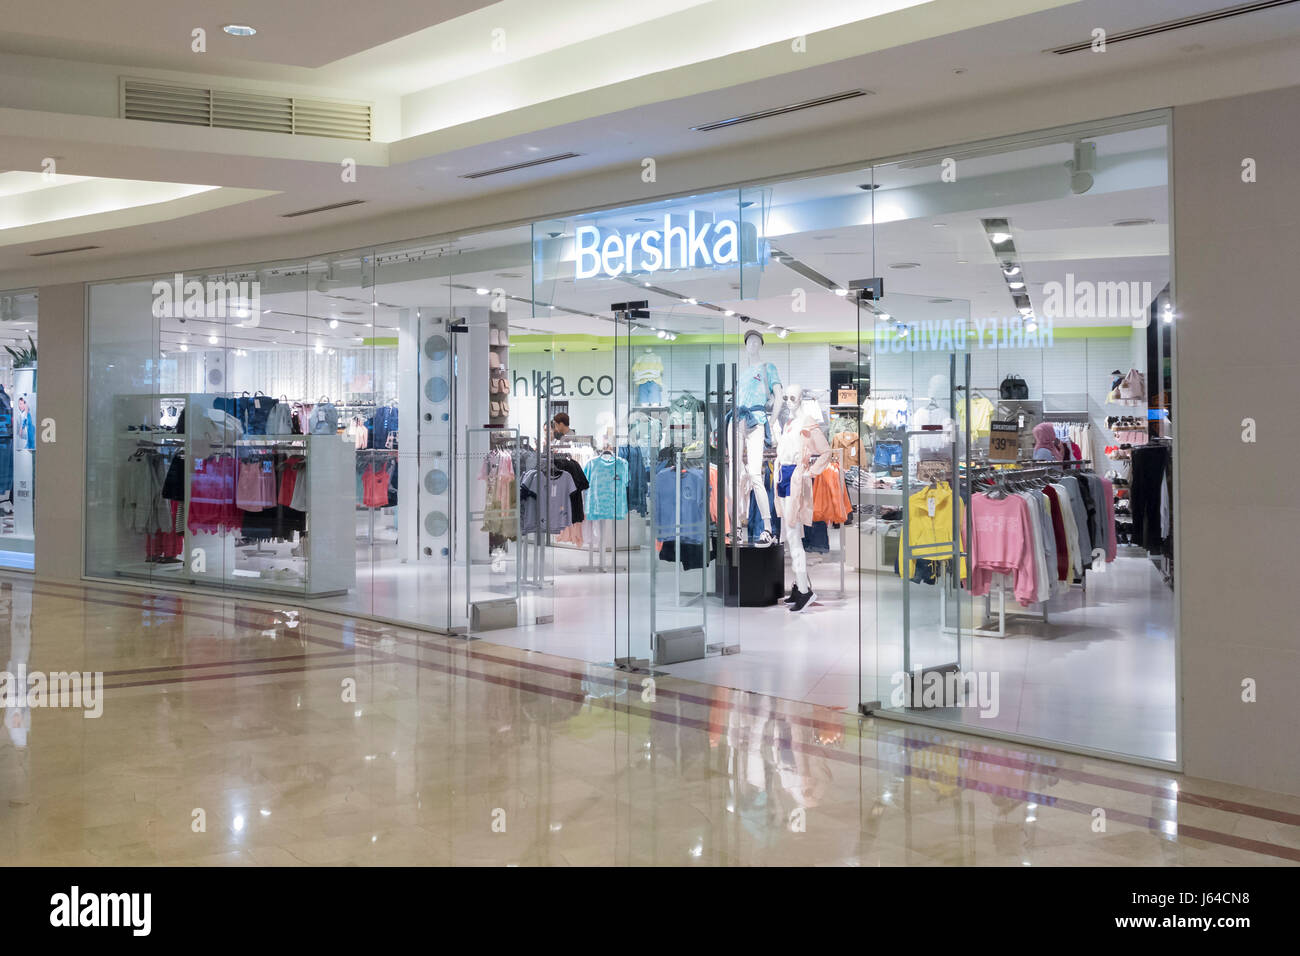 Bershka shop, Malaysia Stock Photo